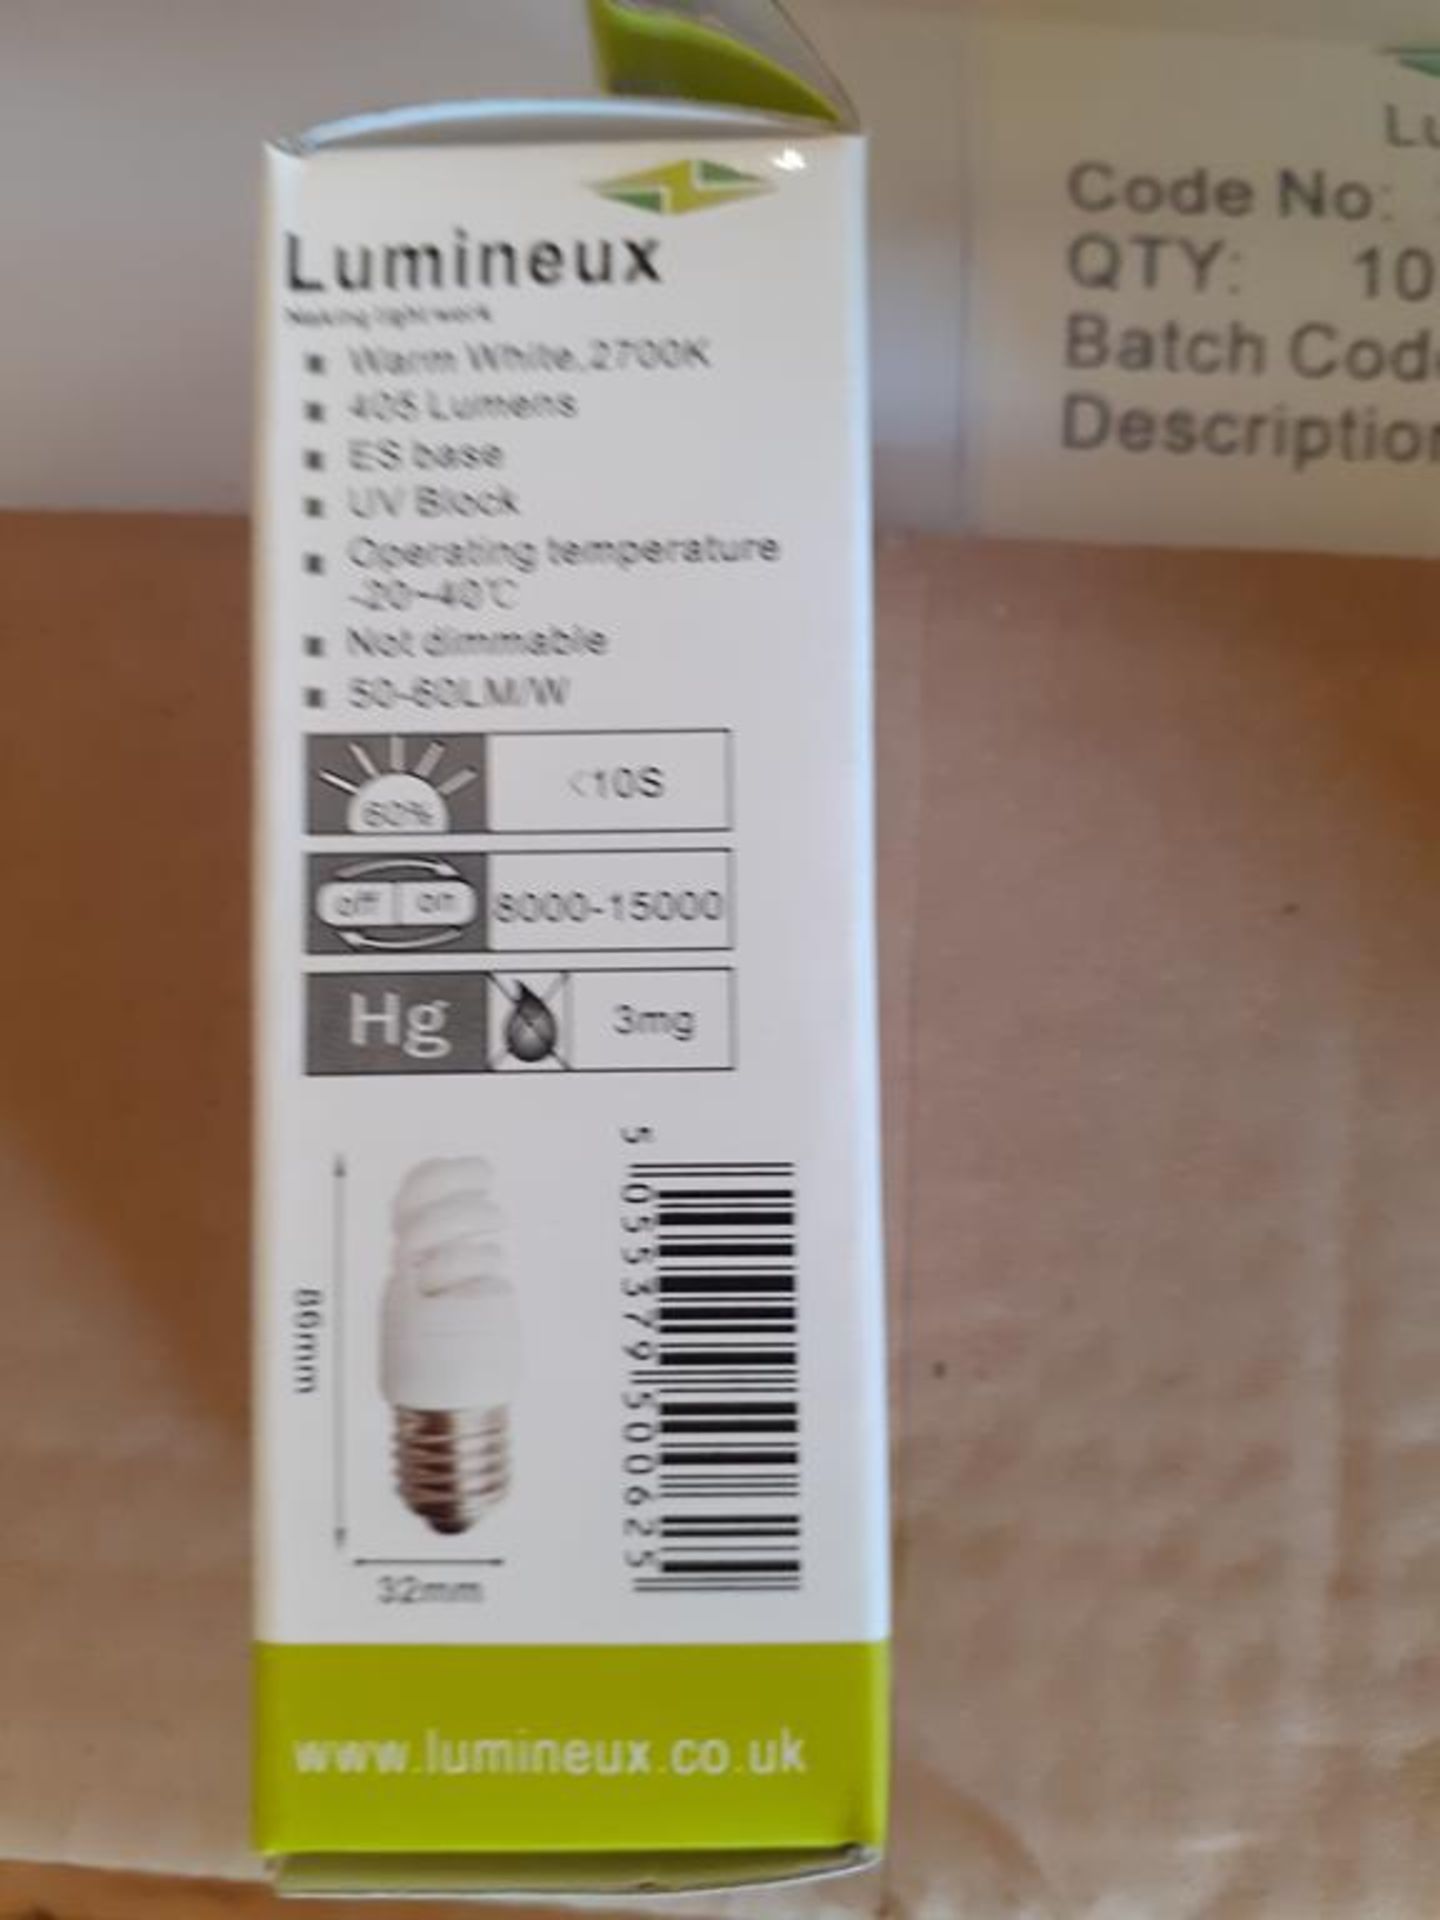 4x boxes of Lumineux Micro Spiral CFL 9W E27 2400K Warm White Energy Saving Bulbs (100pcs per box) - Image 5 of 5